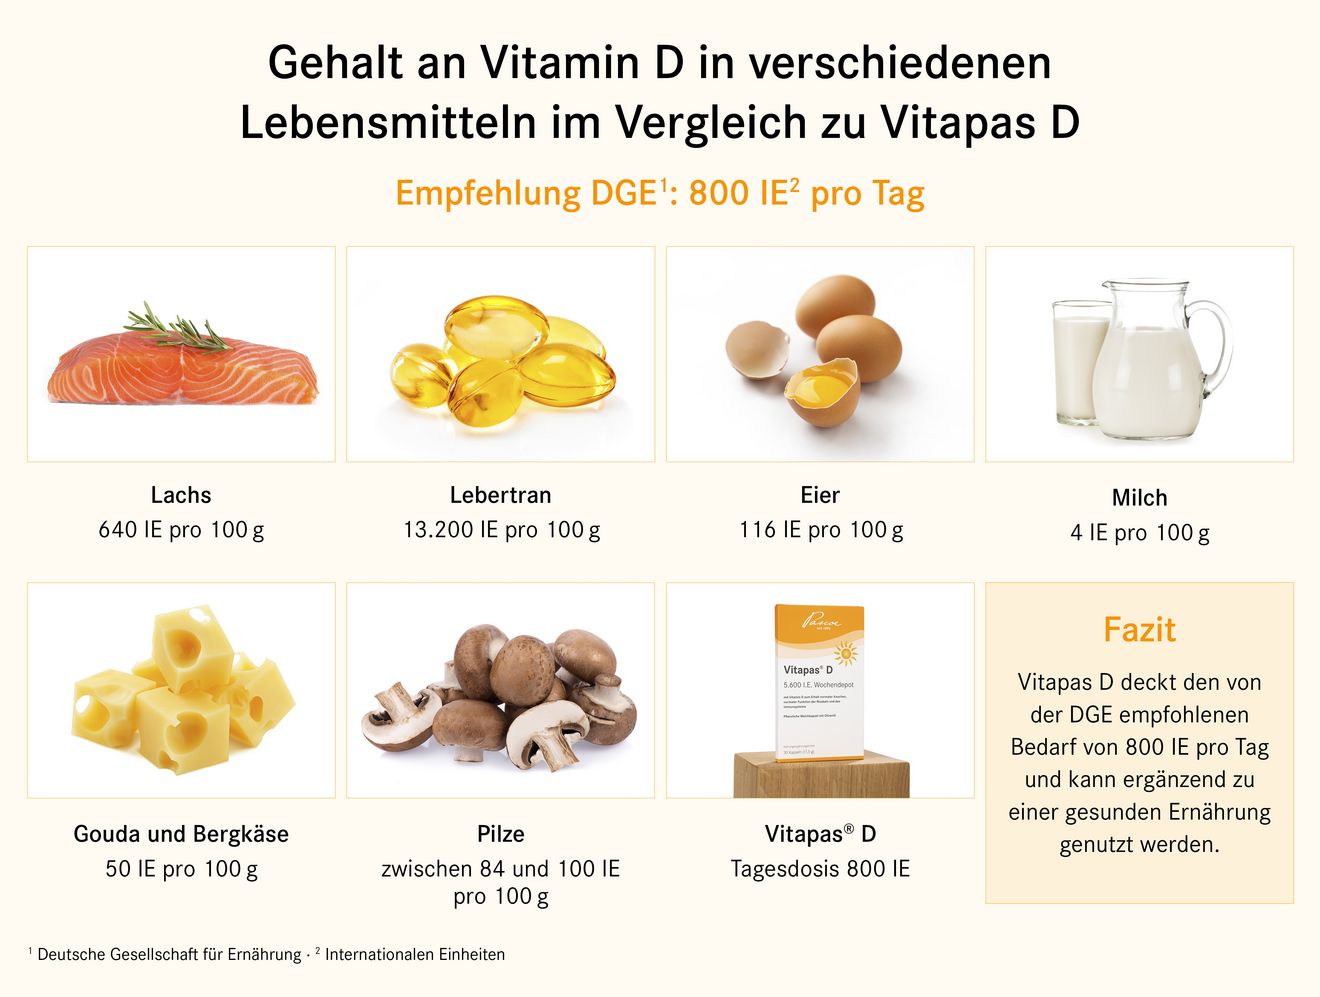 Gehalt an Vitamin D in verschiedenen Lebensmitteln im Vergleich zu Vitapas D